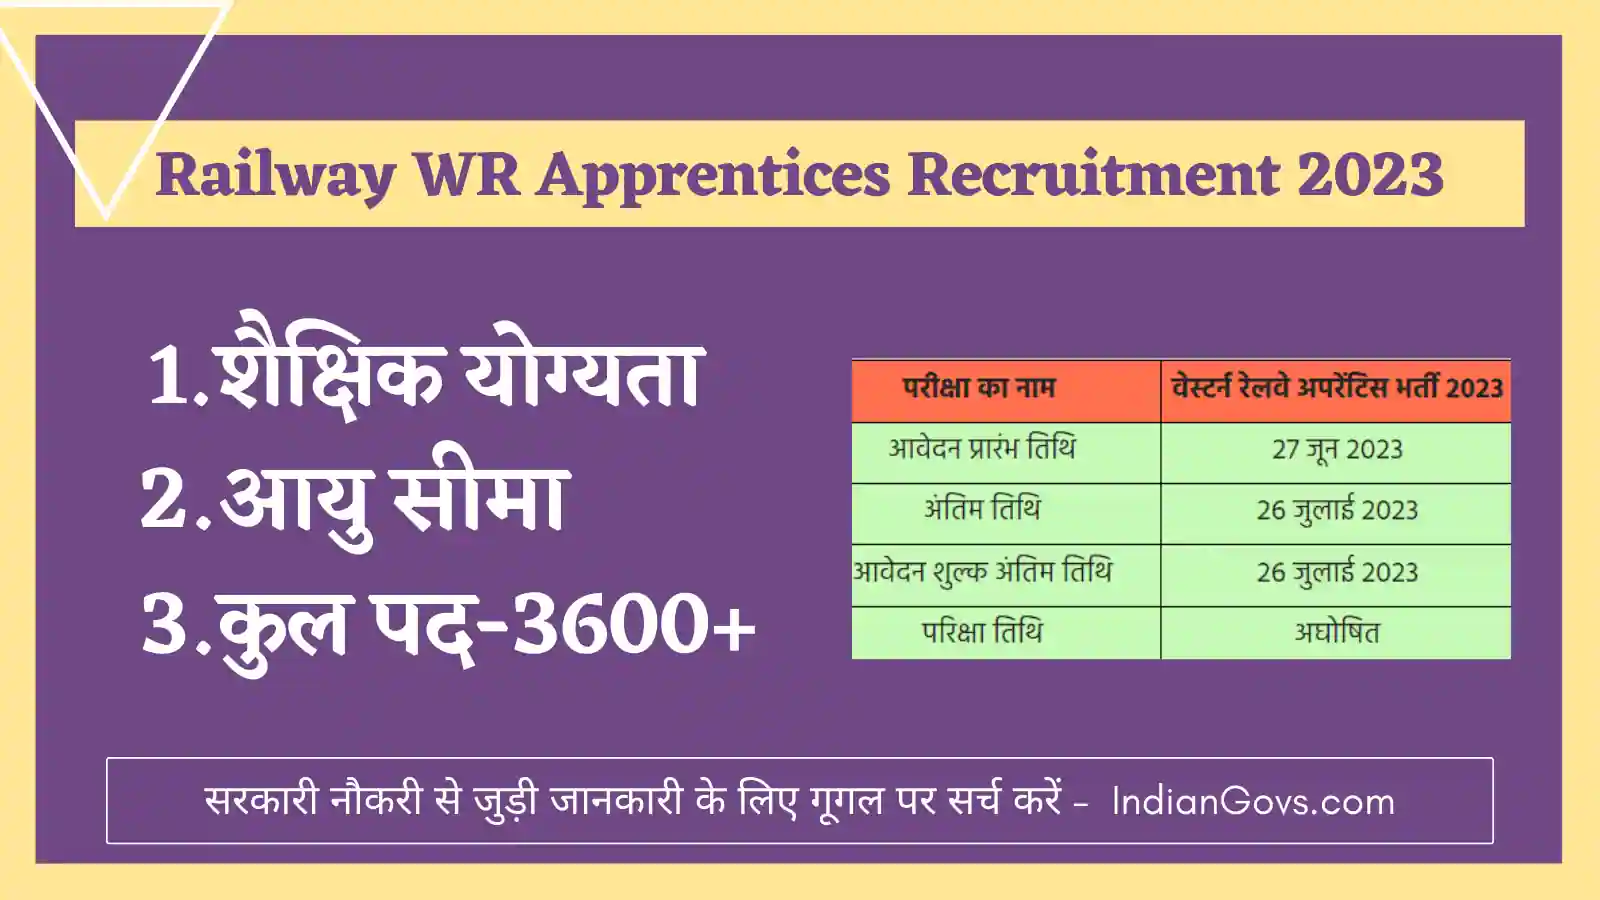 Railway WR Apprentices Recruitment 2023